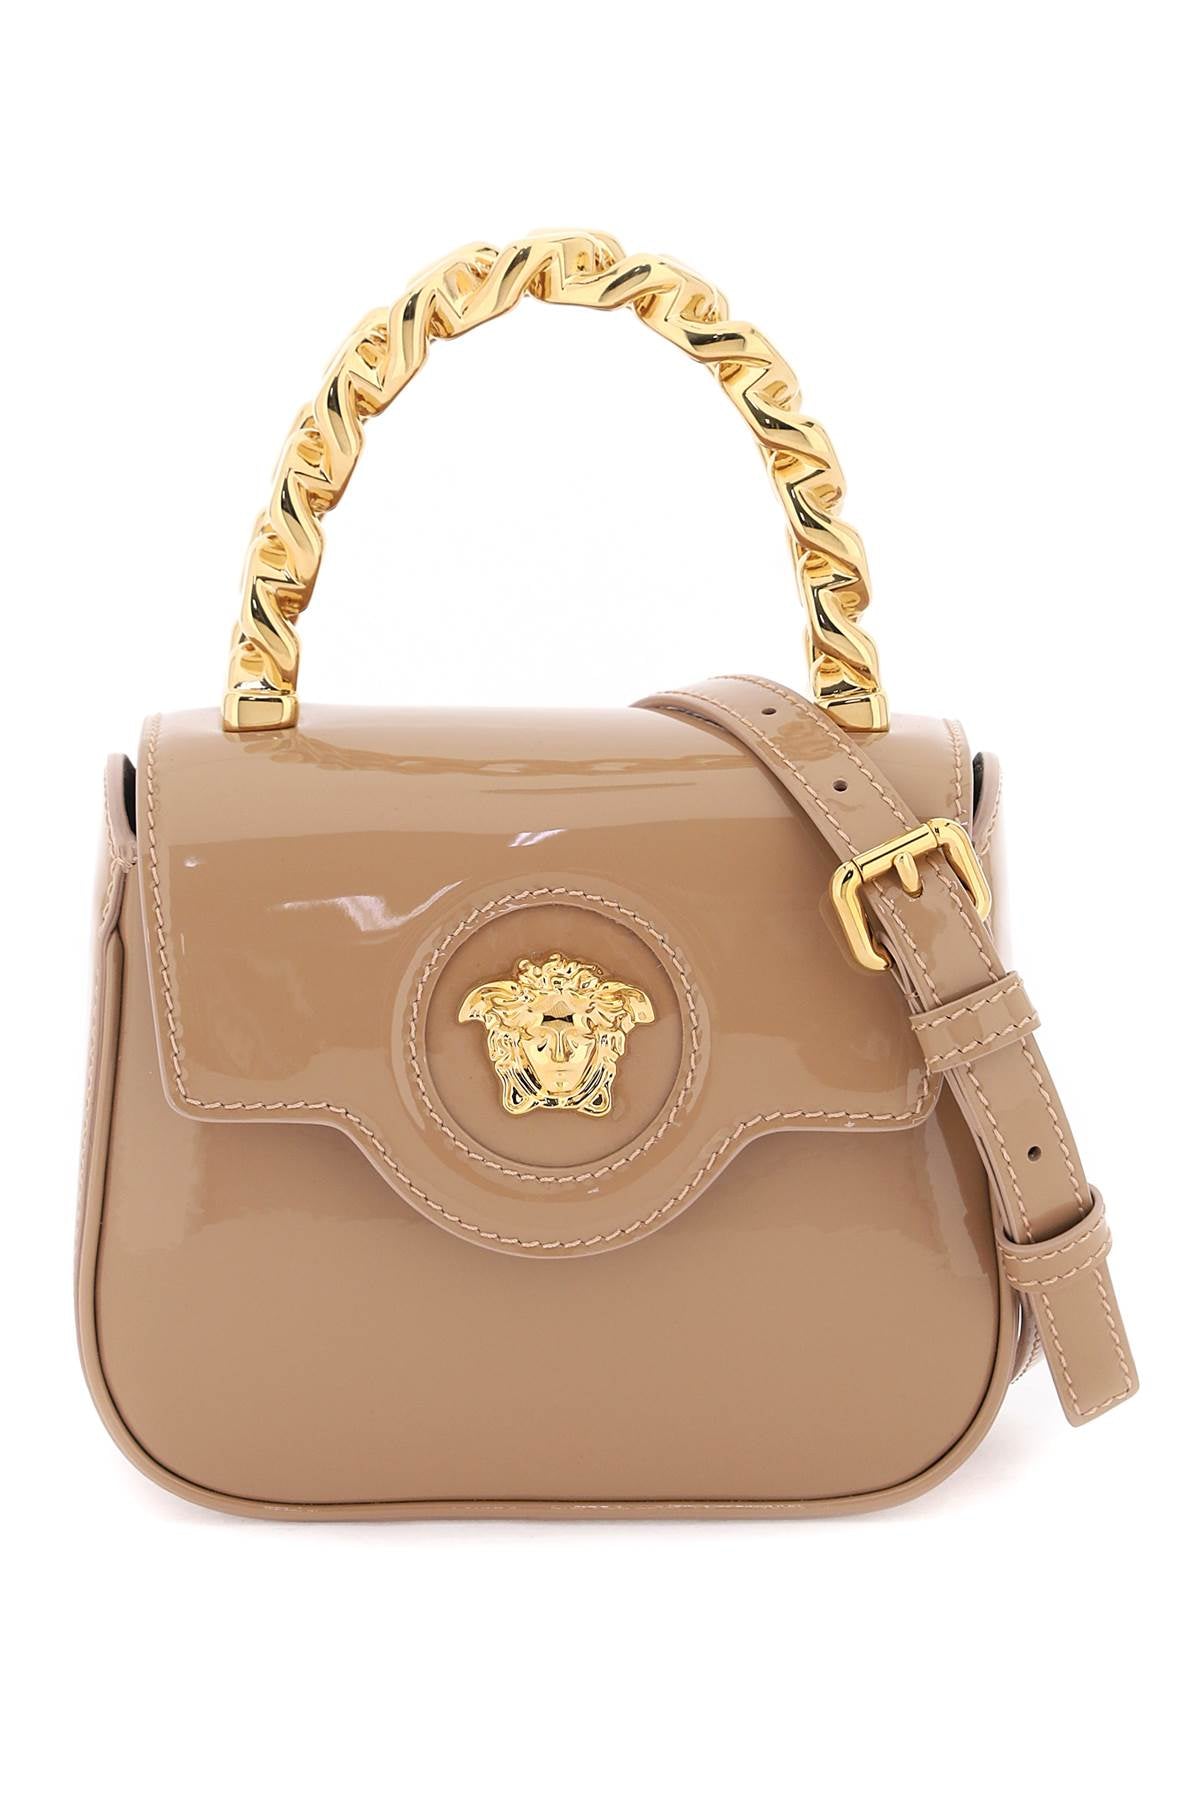 VERSACE Tan Patent Leather Mini Medusa Handbag with Gold-Tone Chain and Detachable Strap